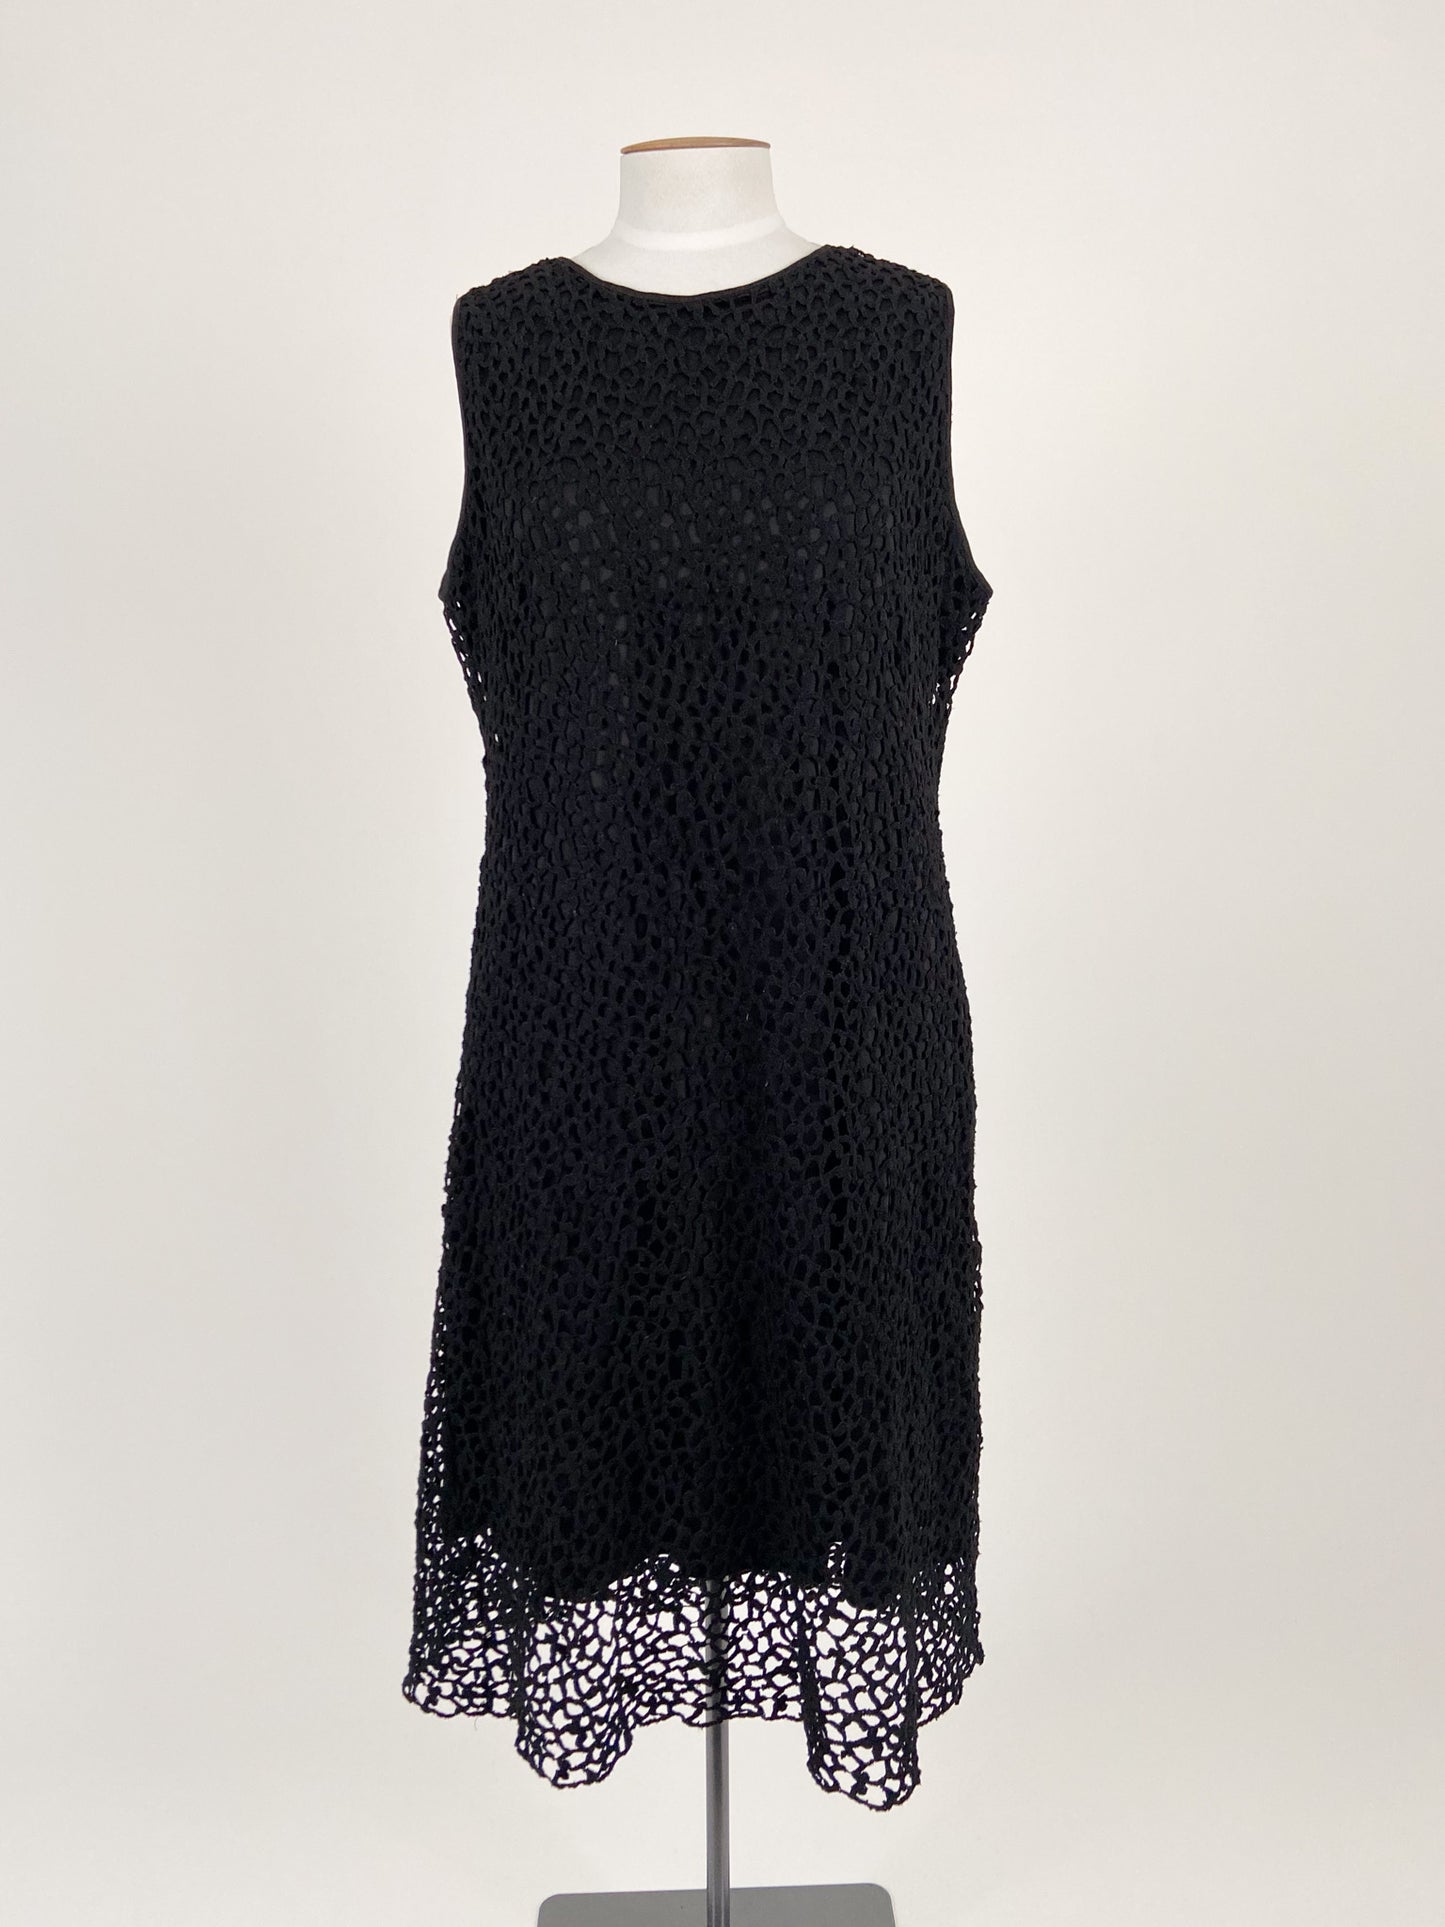 Millers | Black Formal/Workwear Dress | Size 18